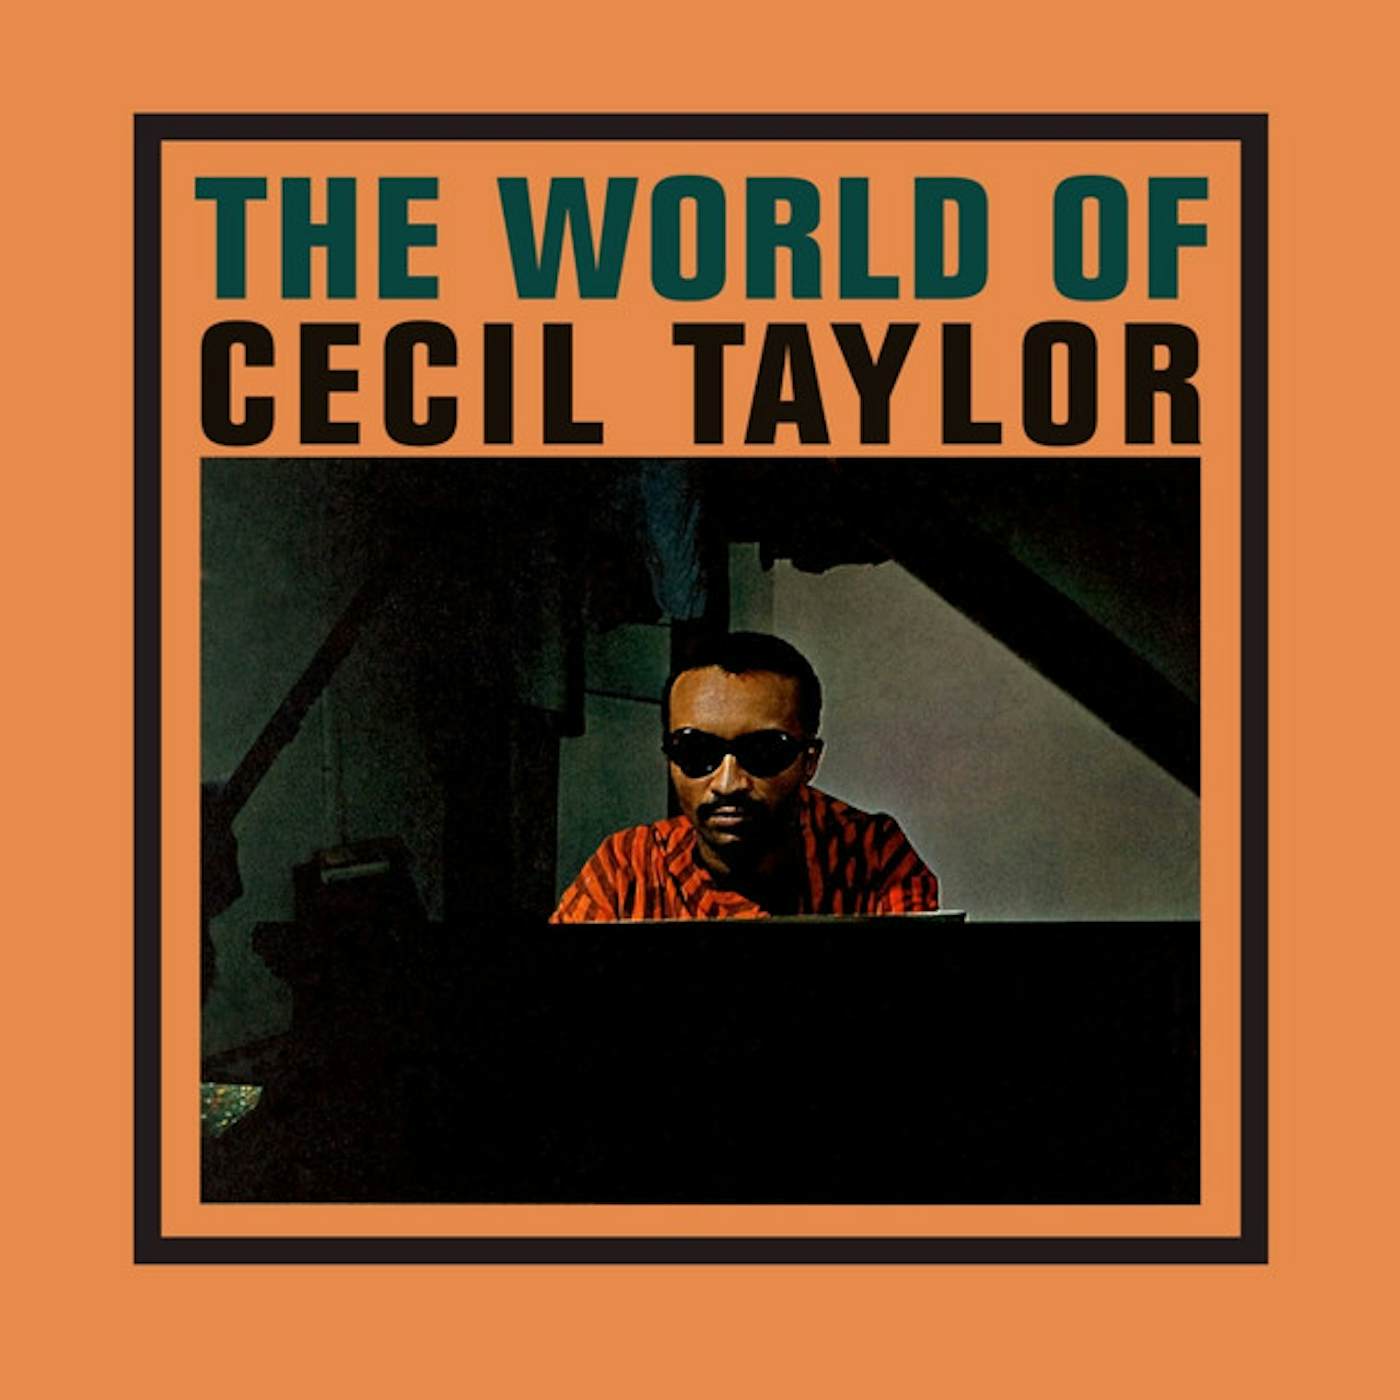 WORLD OF CECIL TAYLOR Vinyl Record